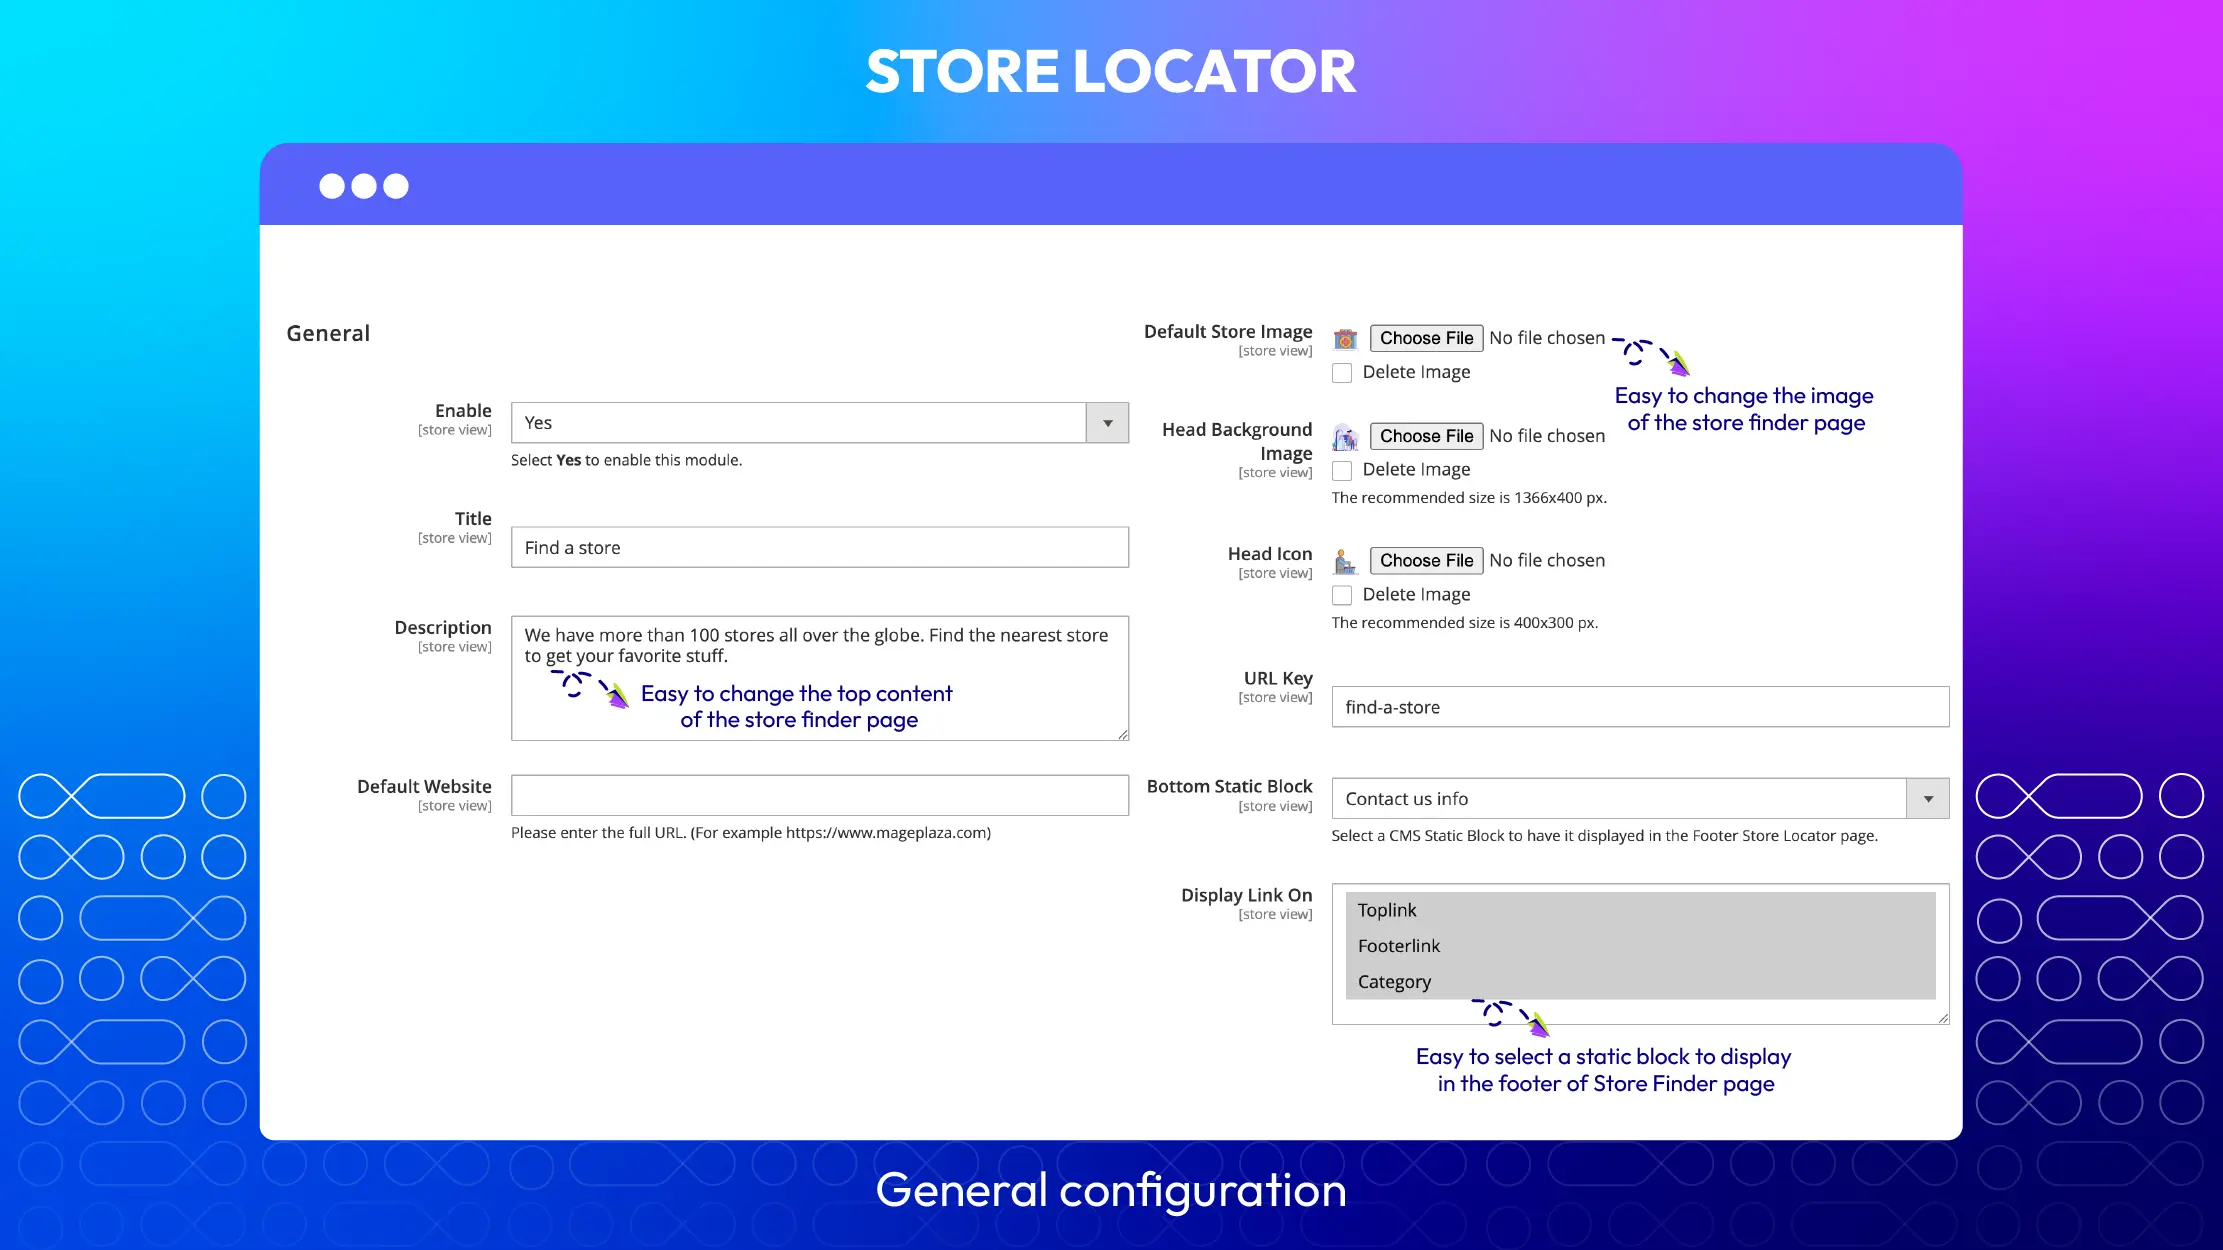 General configuration of Store Locator